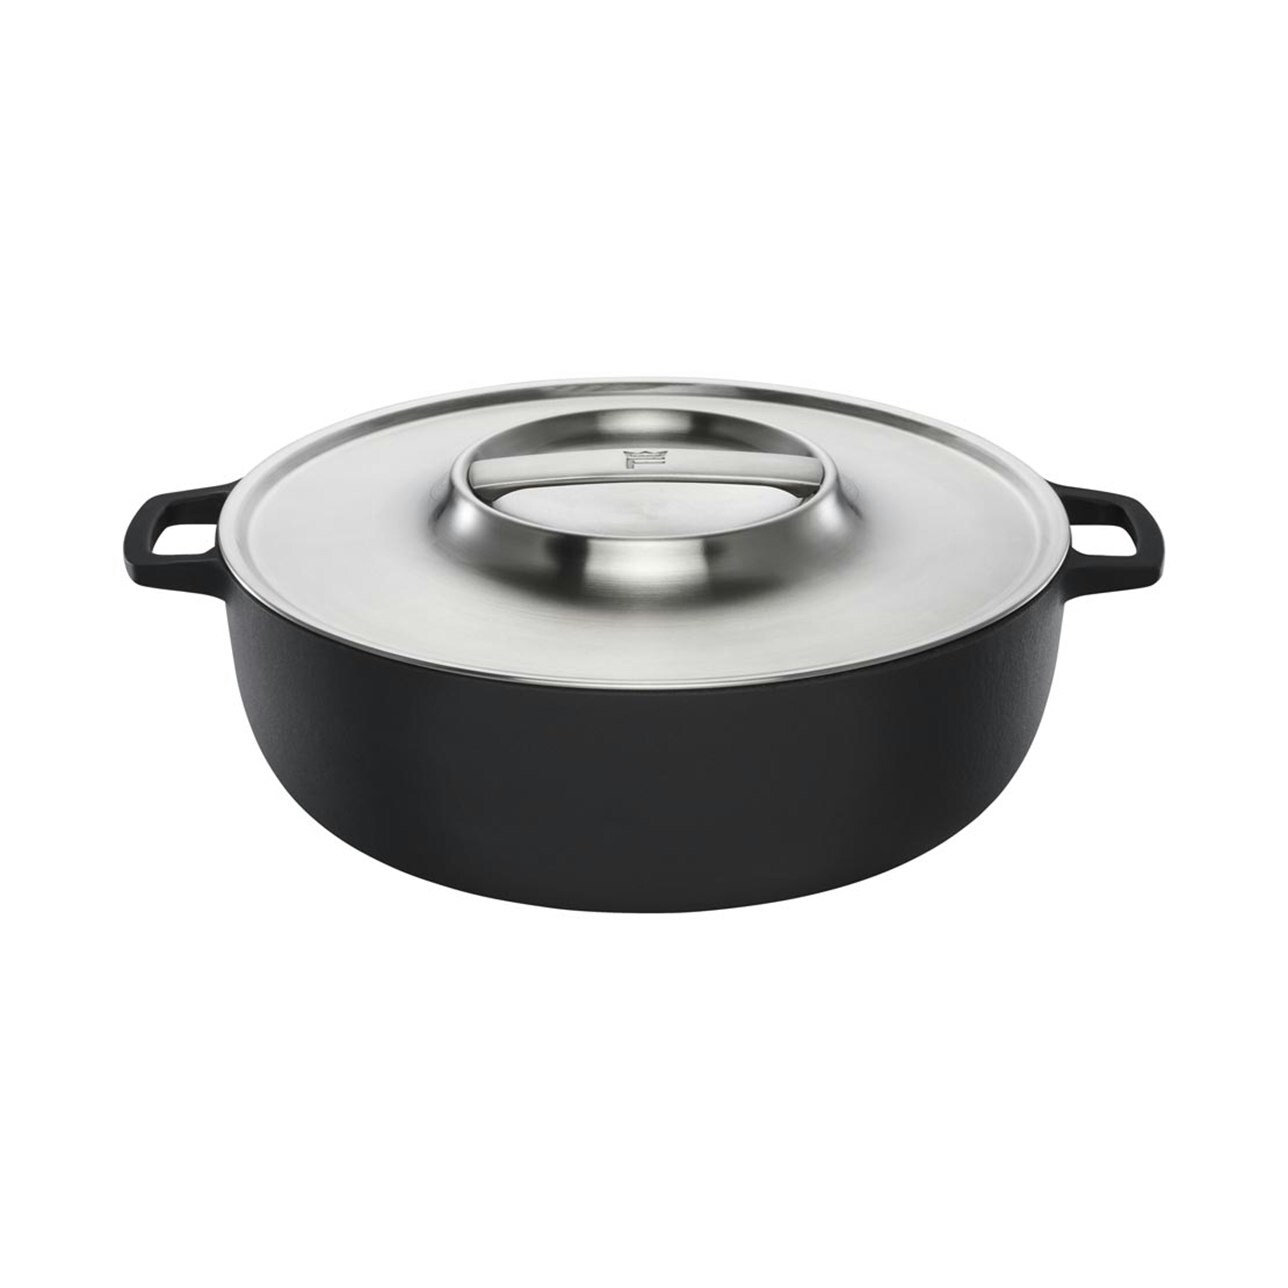 https://royaldesign.com/image/2/fiskars-norden-grill-chef-cast-iron-pot-30-cm-0